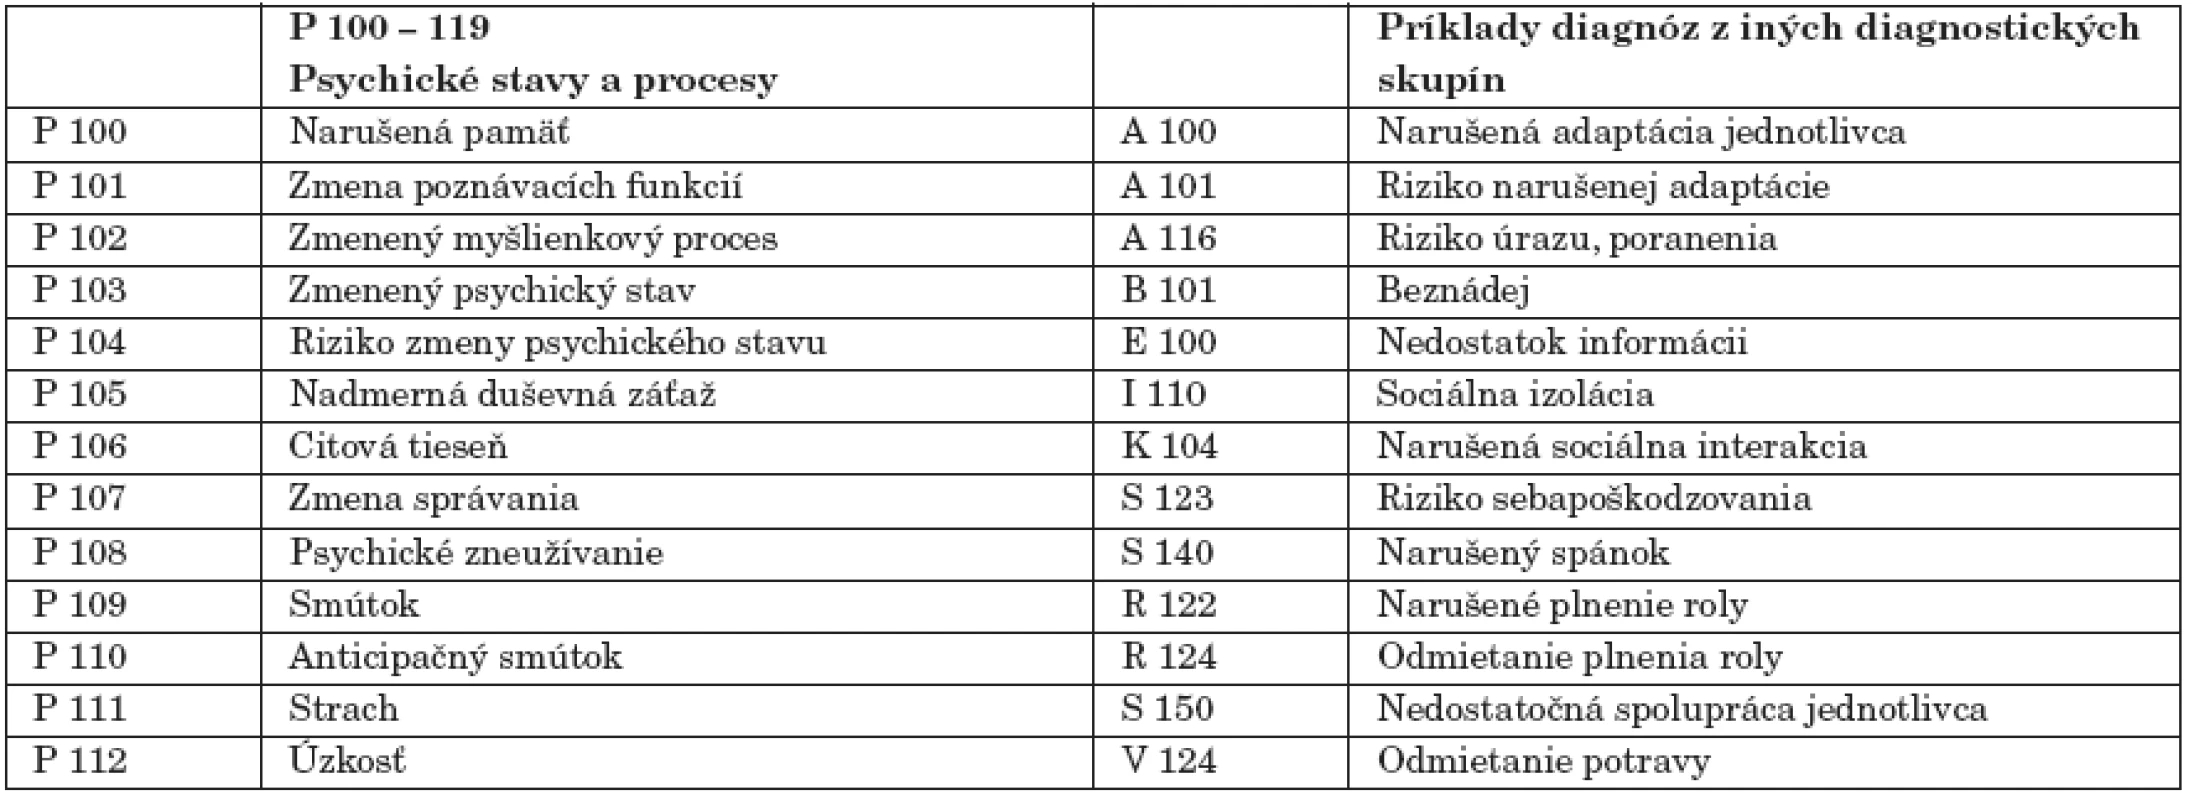 Výber zo zoznamu sesterských diagnóz podľa Vyhlášky č. 306 MZSR.